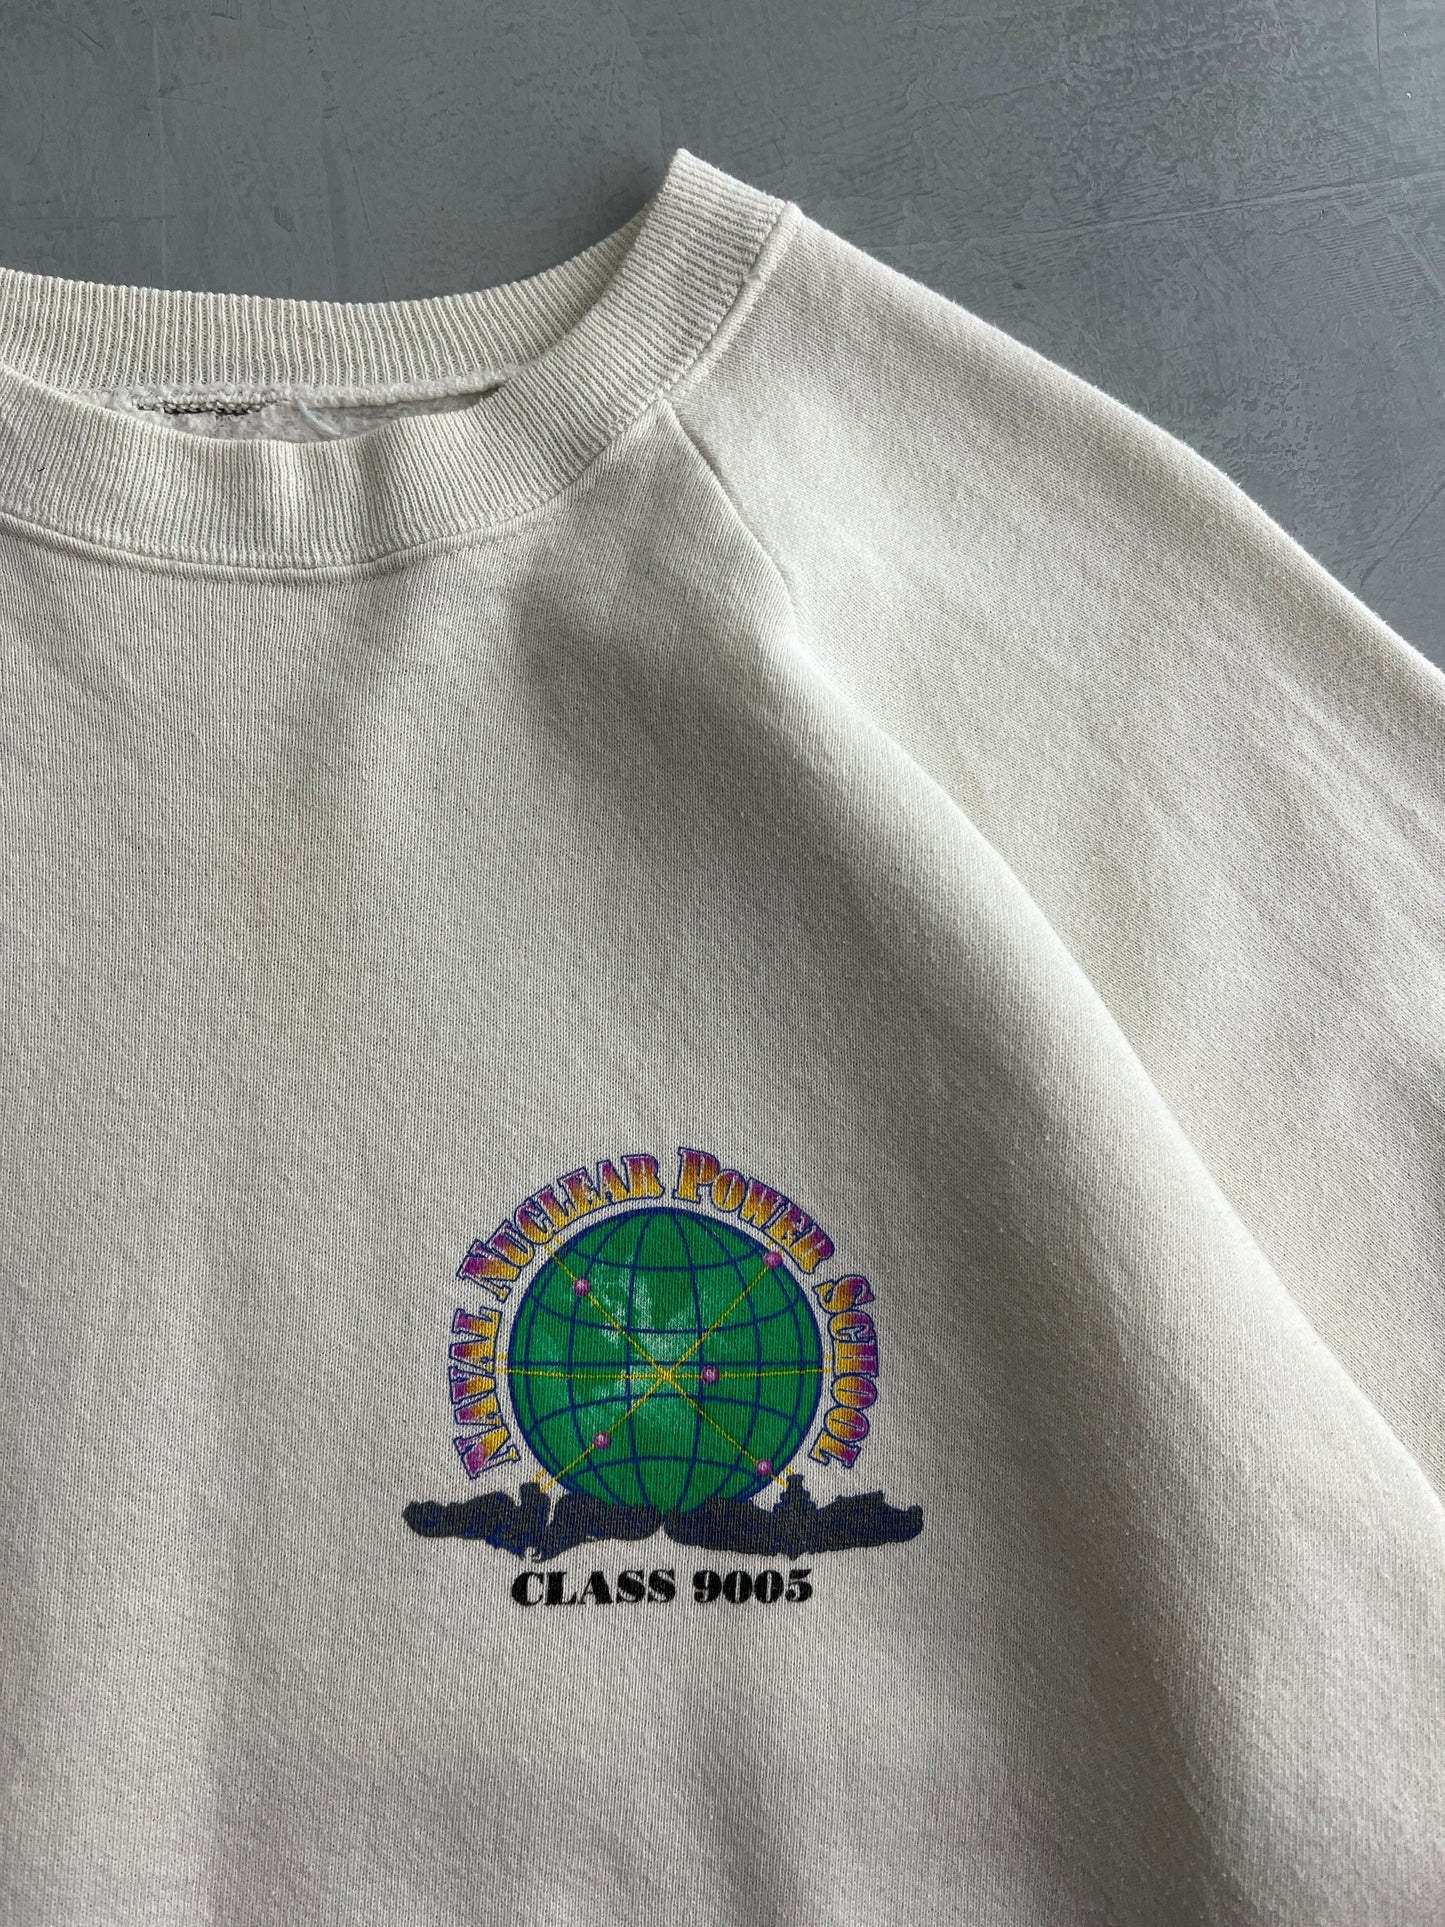 Naval Nuclear Power Sweatshirt [L]